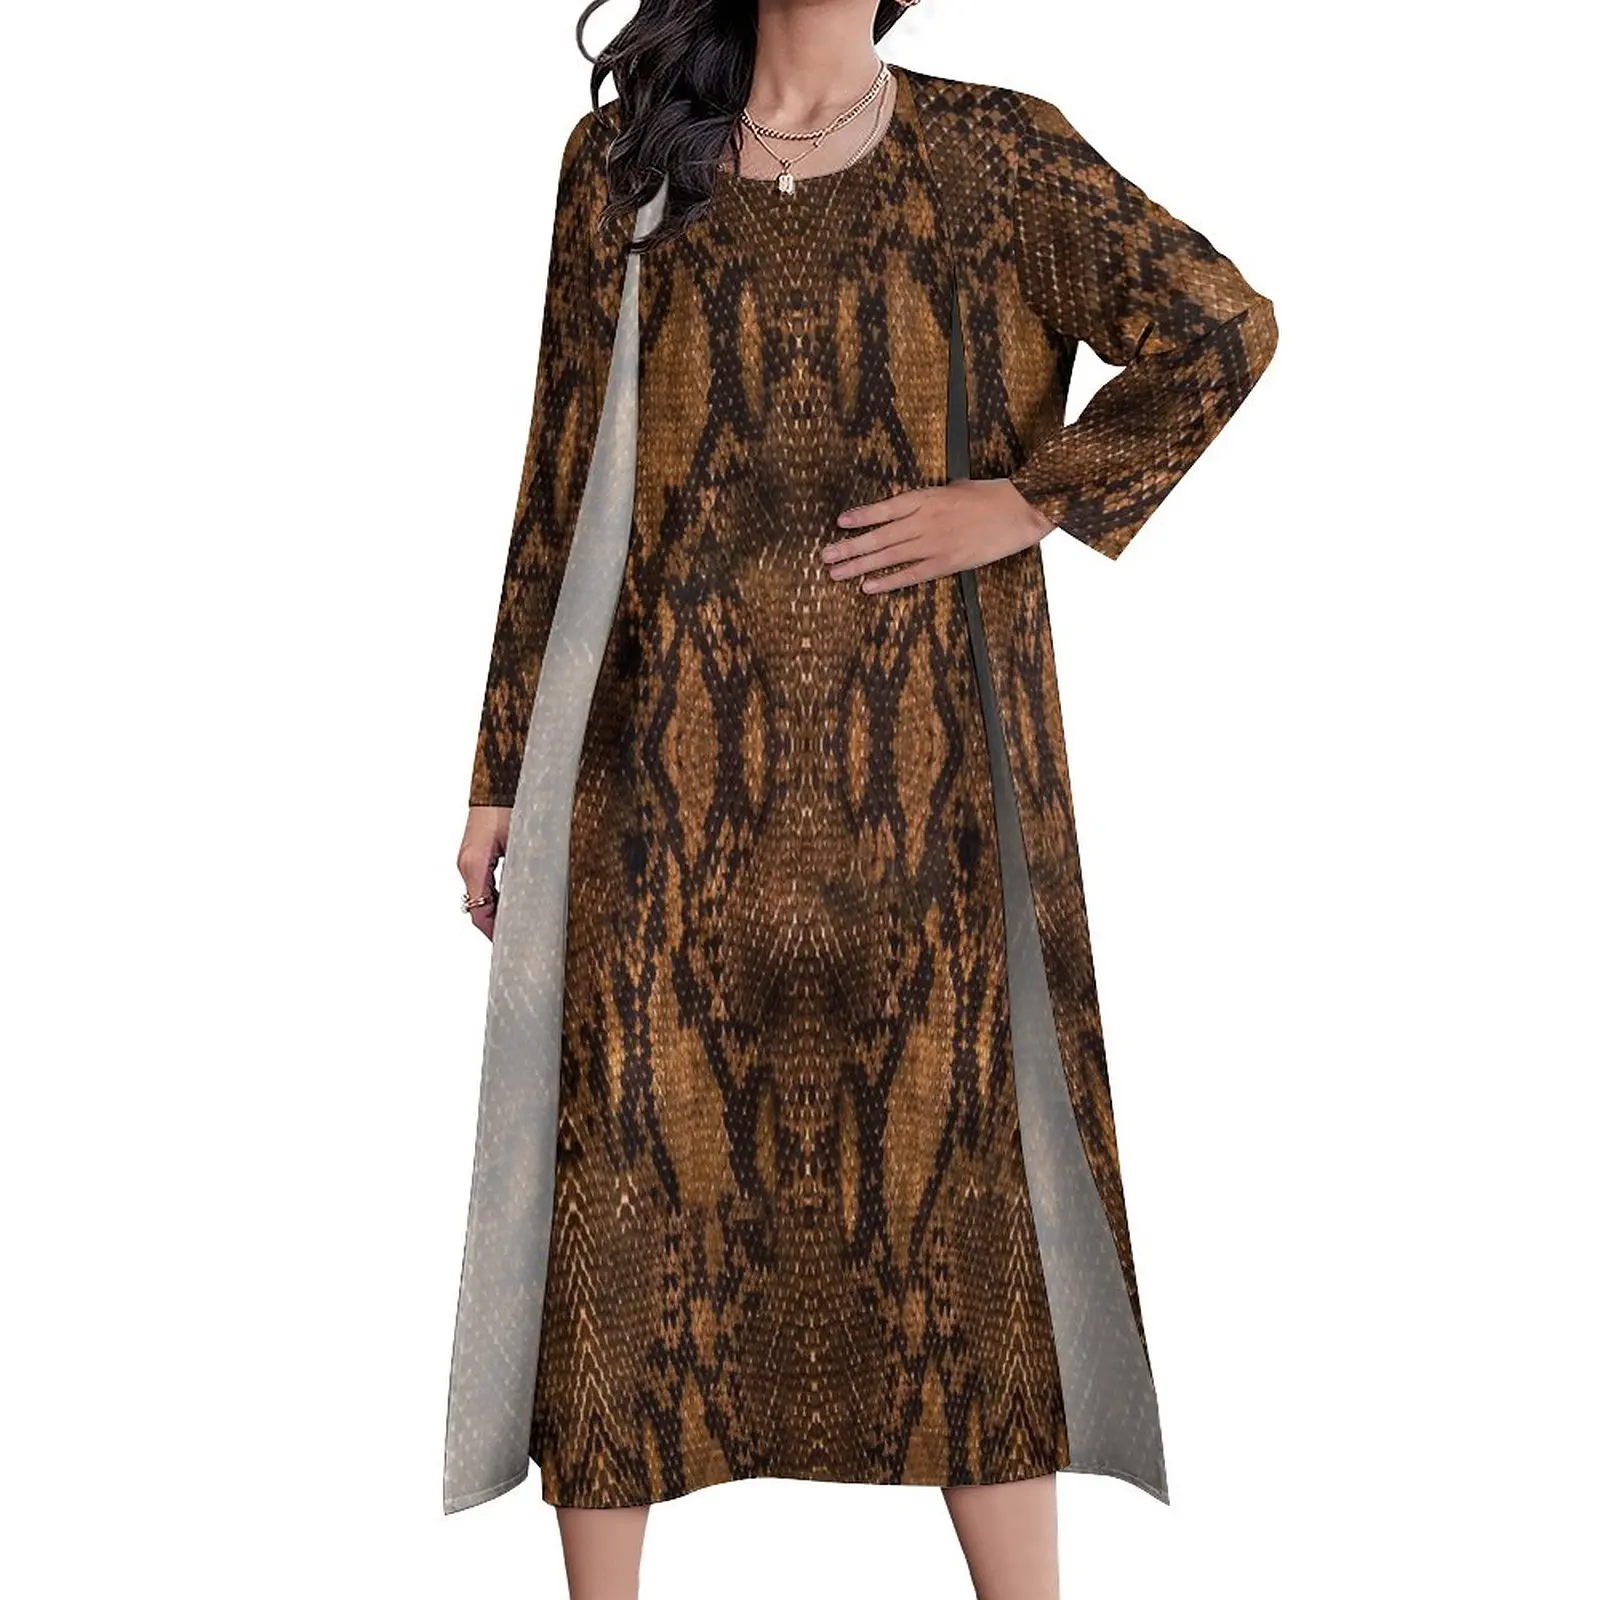 

Brown Snakeskin Dress Animal Print Beach Maxi Dress Long Sleeve Graphic Bohemia Long Dresses Street Fashion Oversize Clothing